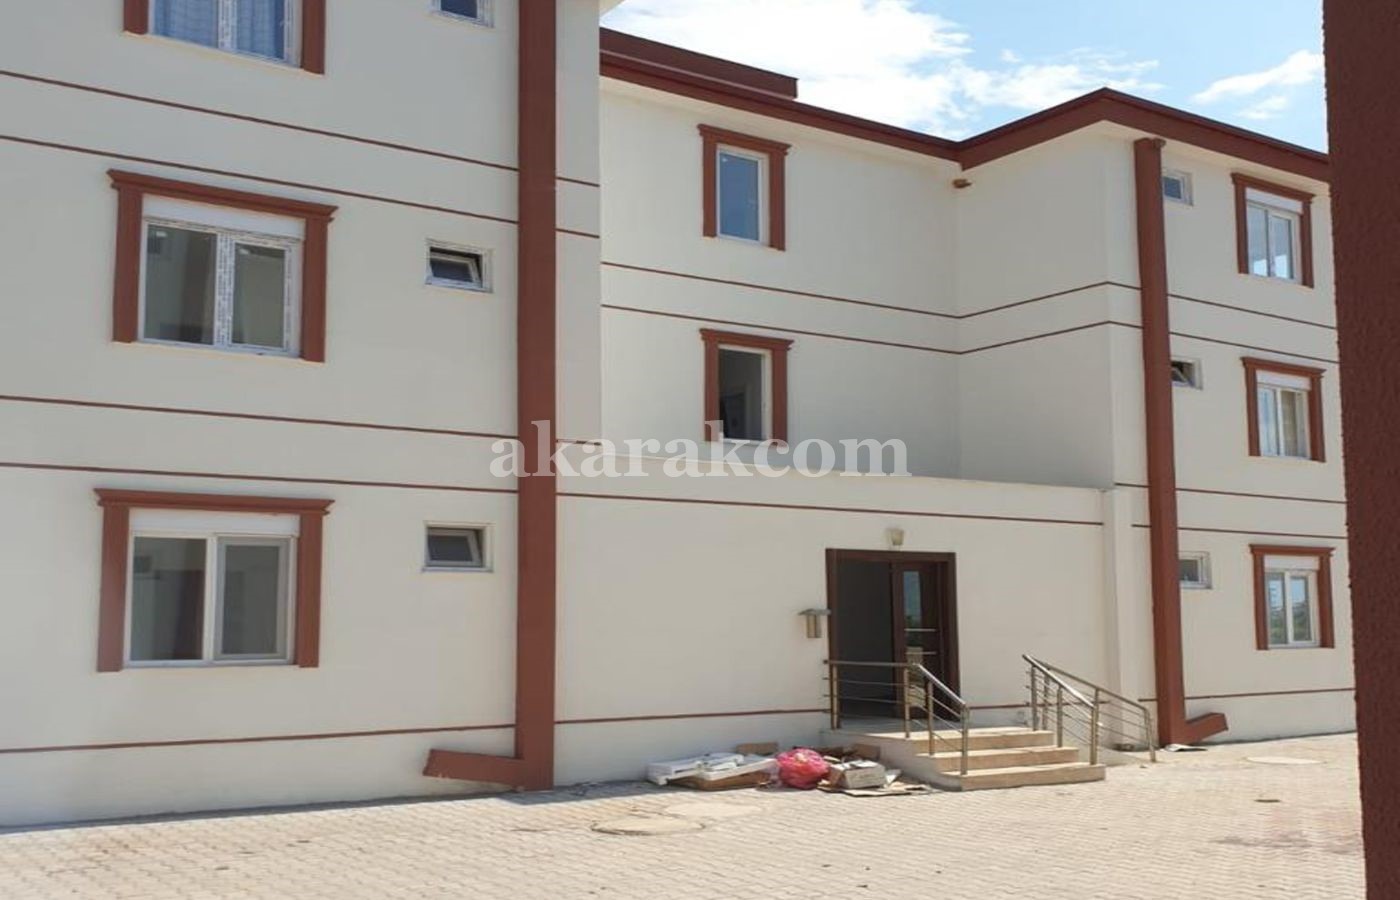 Cheap Apartment For Sale in Antalya Turkey|Akarakcom Real Estate